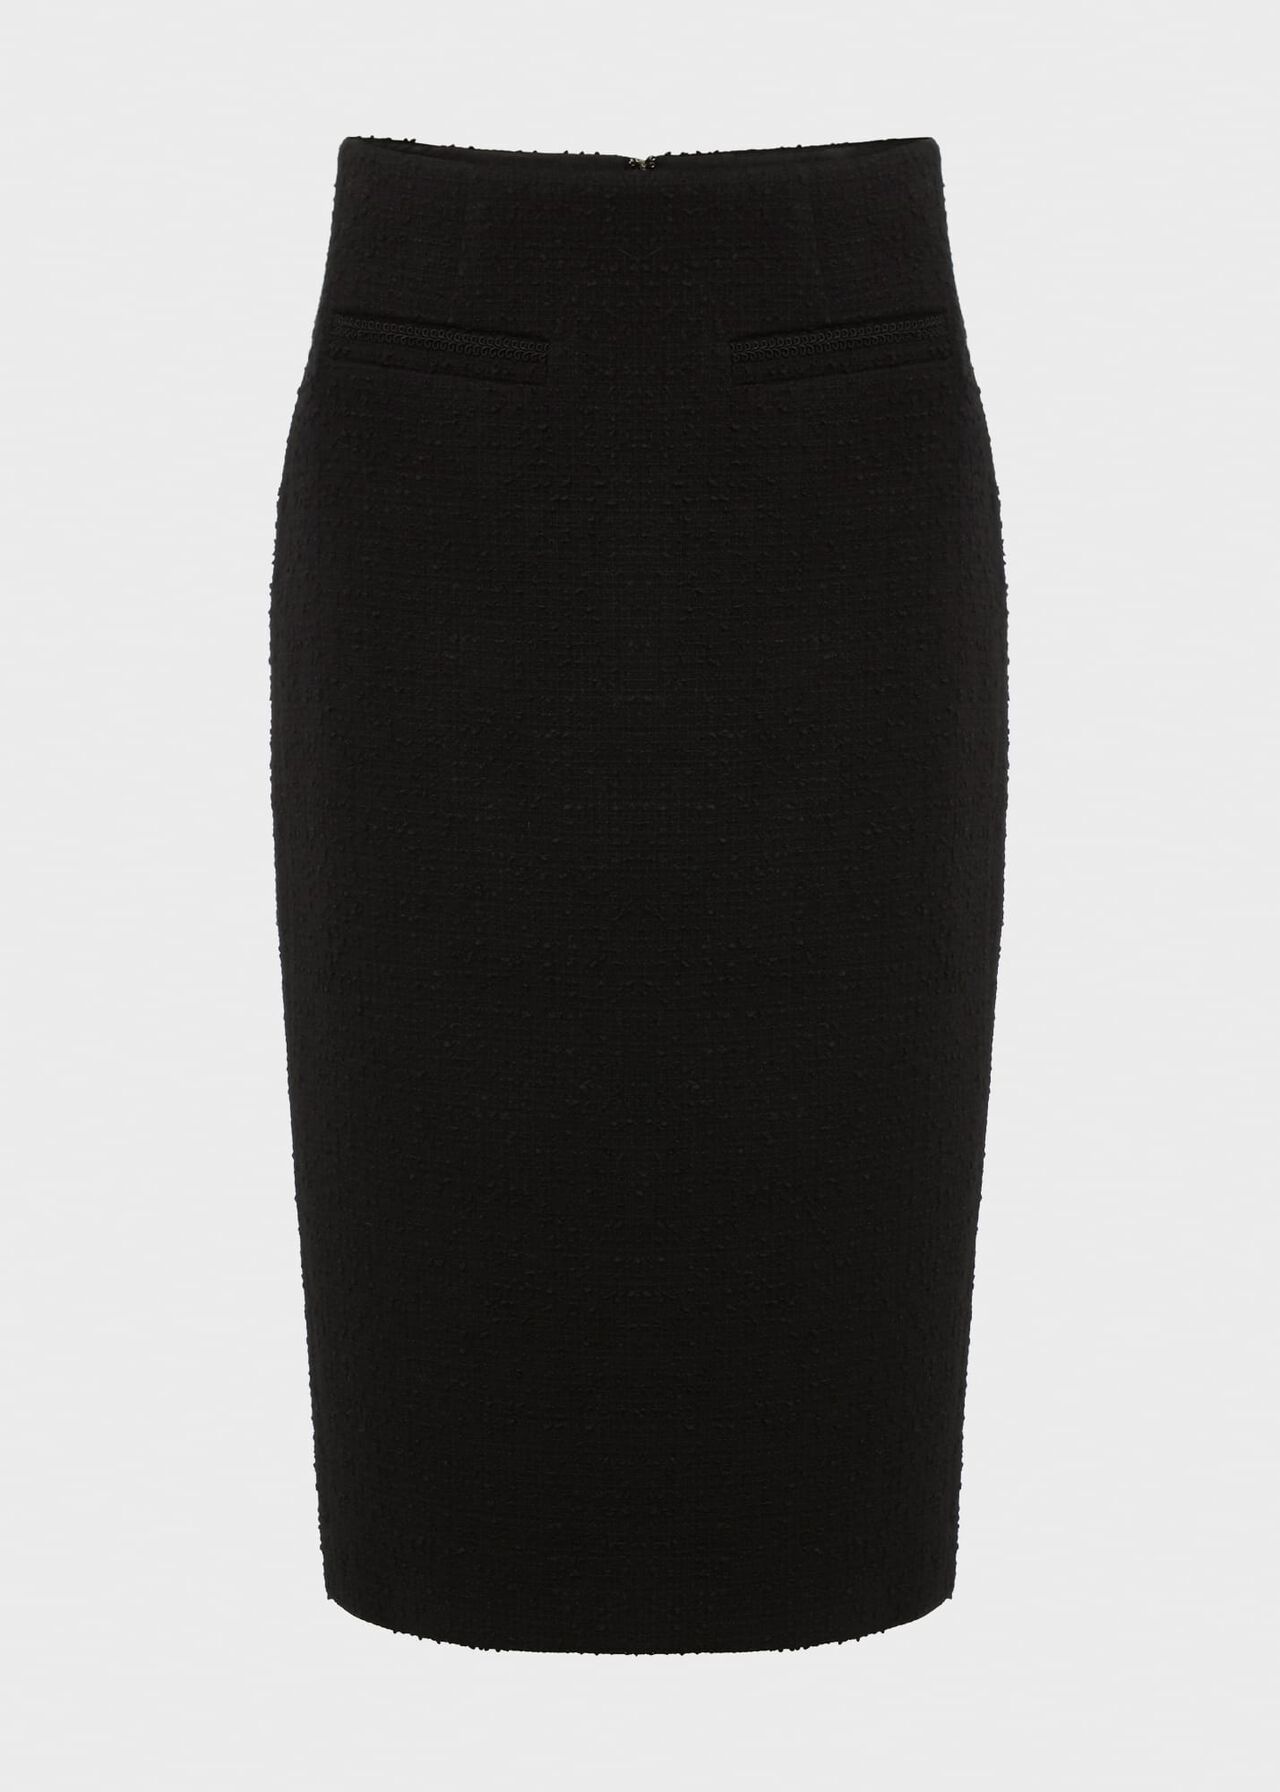 Gabi Tweed Skirt, Black, hi-res